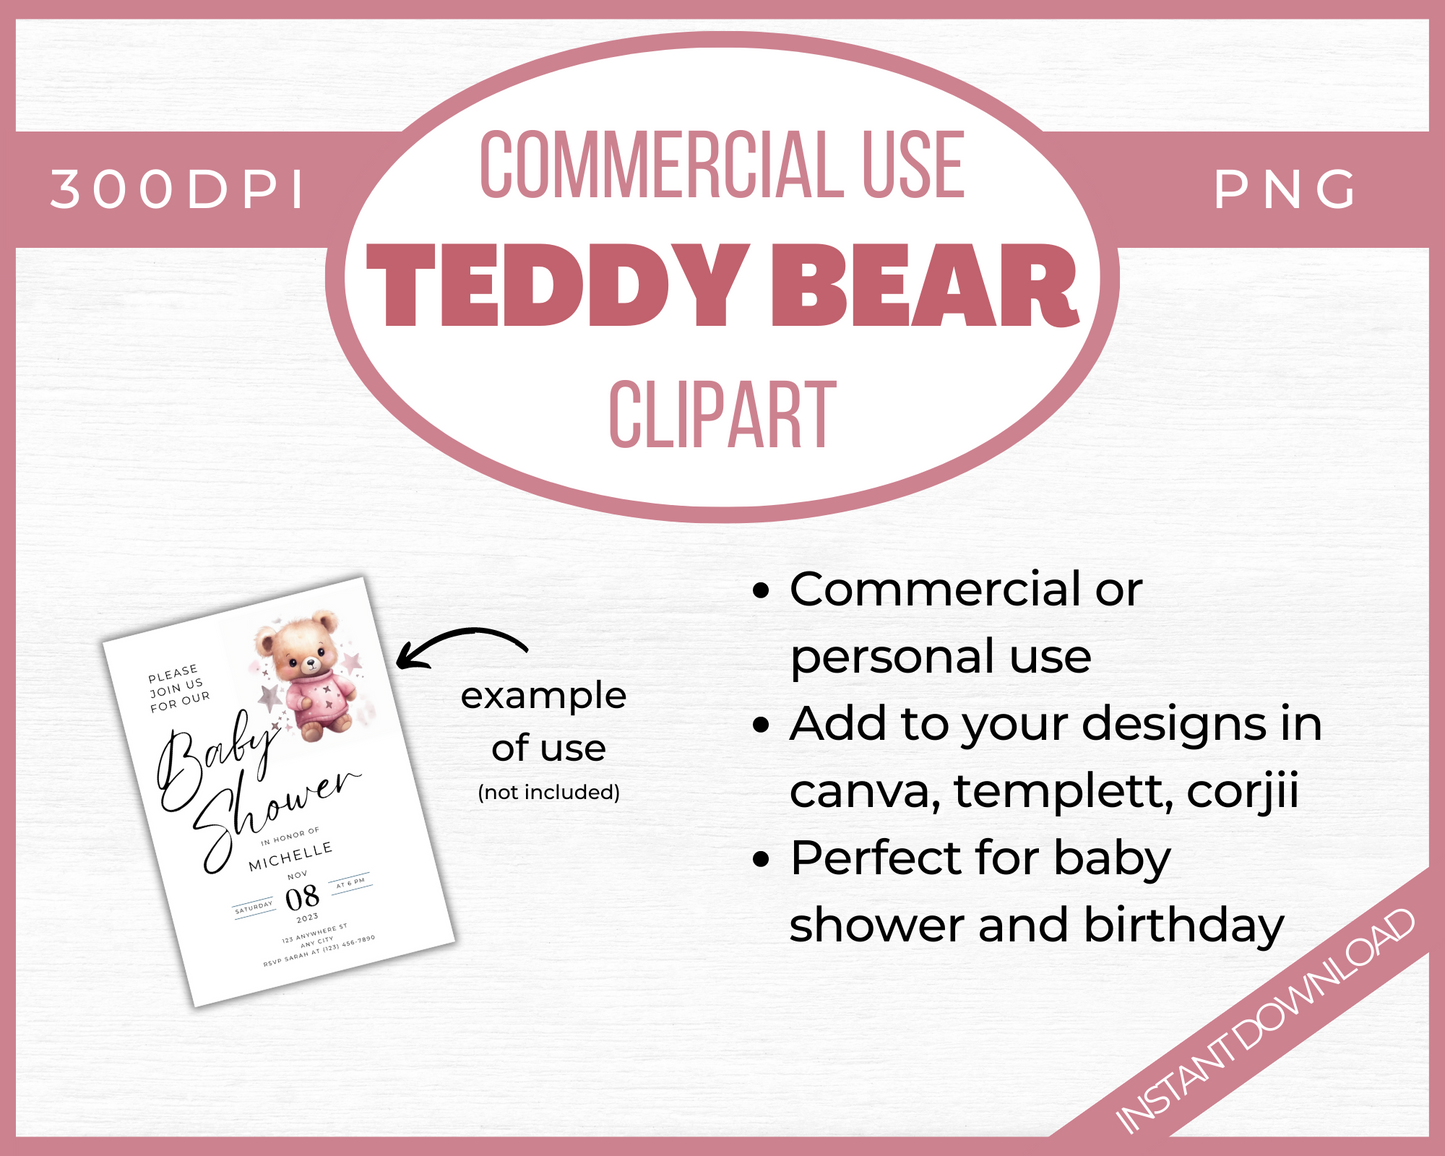 Commercial Use Teddy Bear Clip Art pack